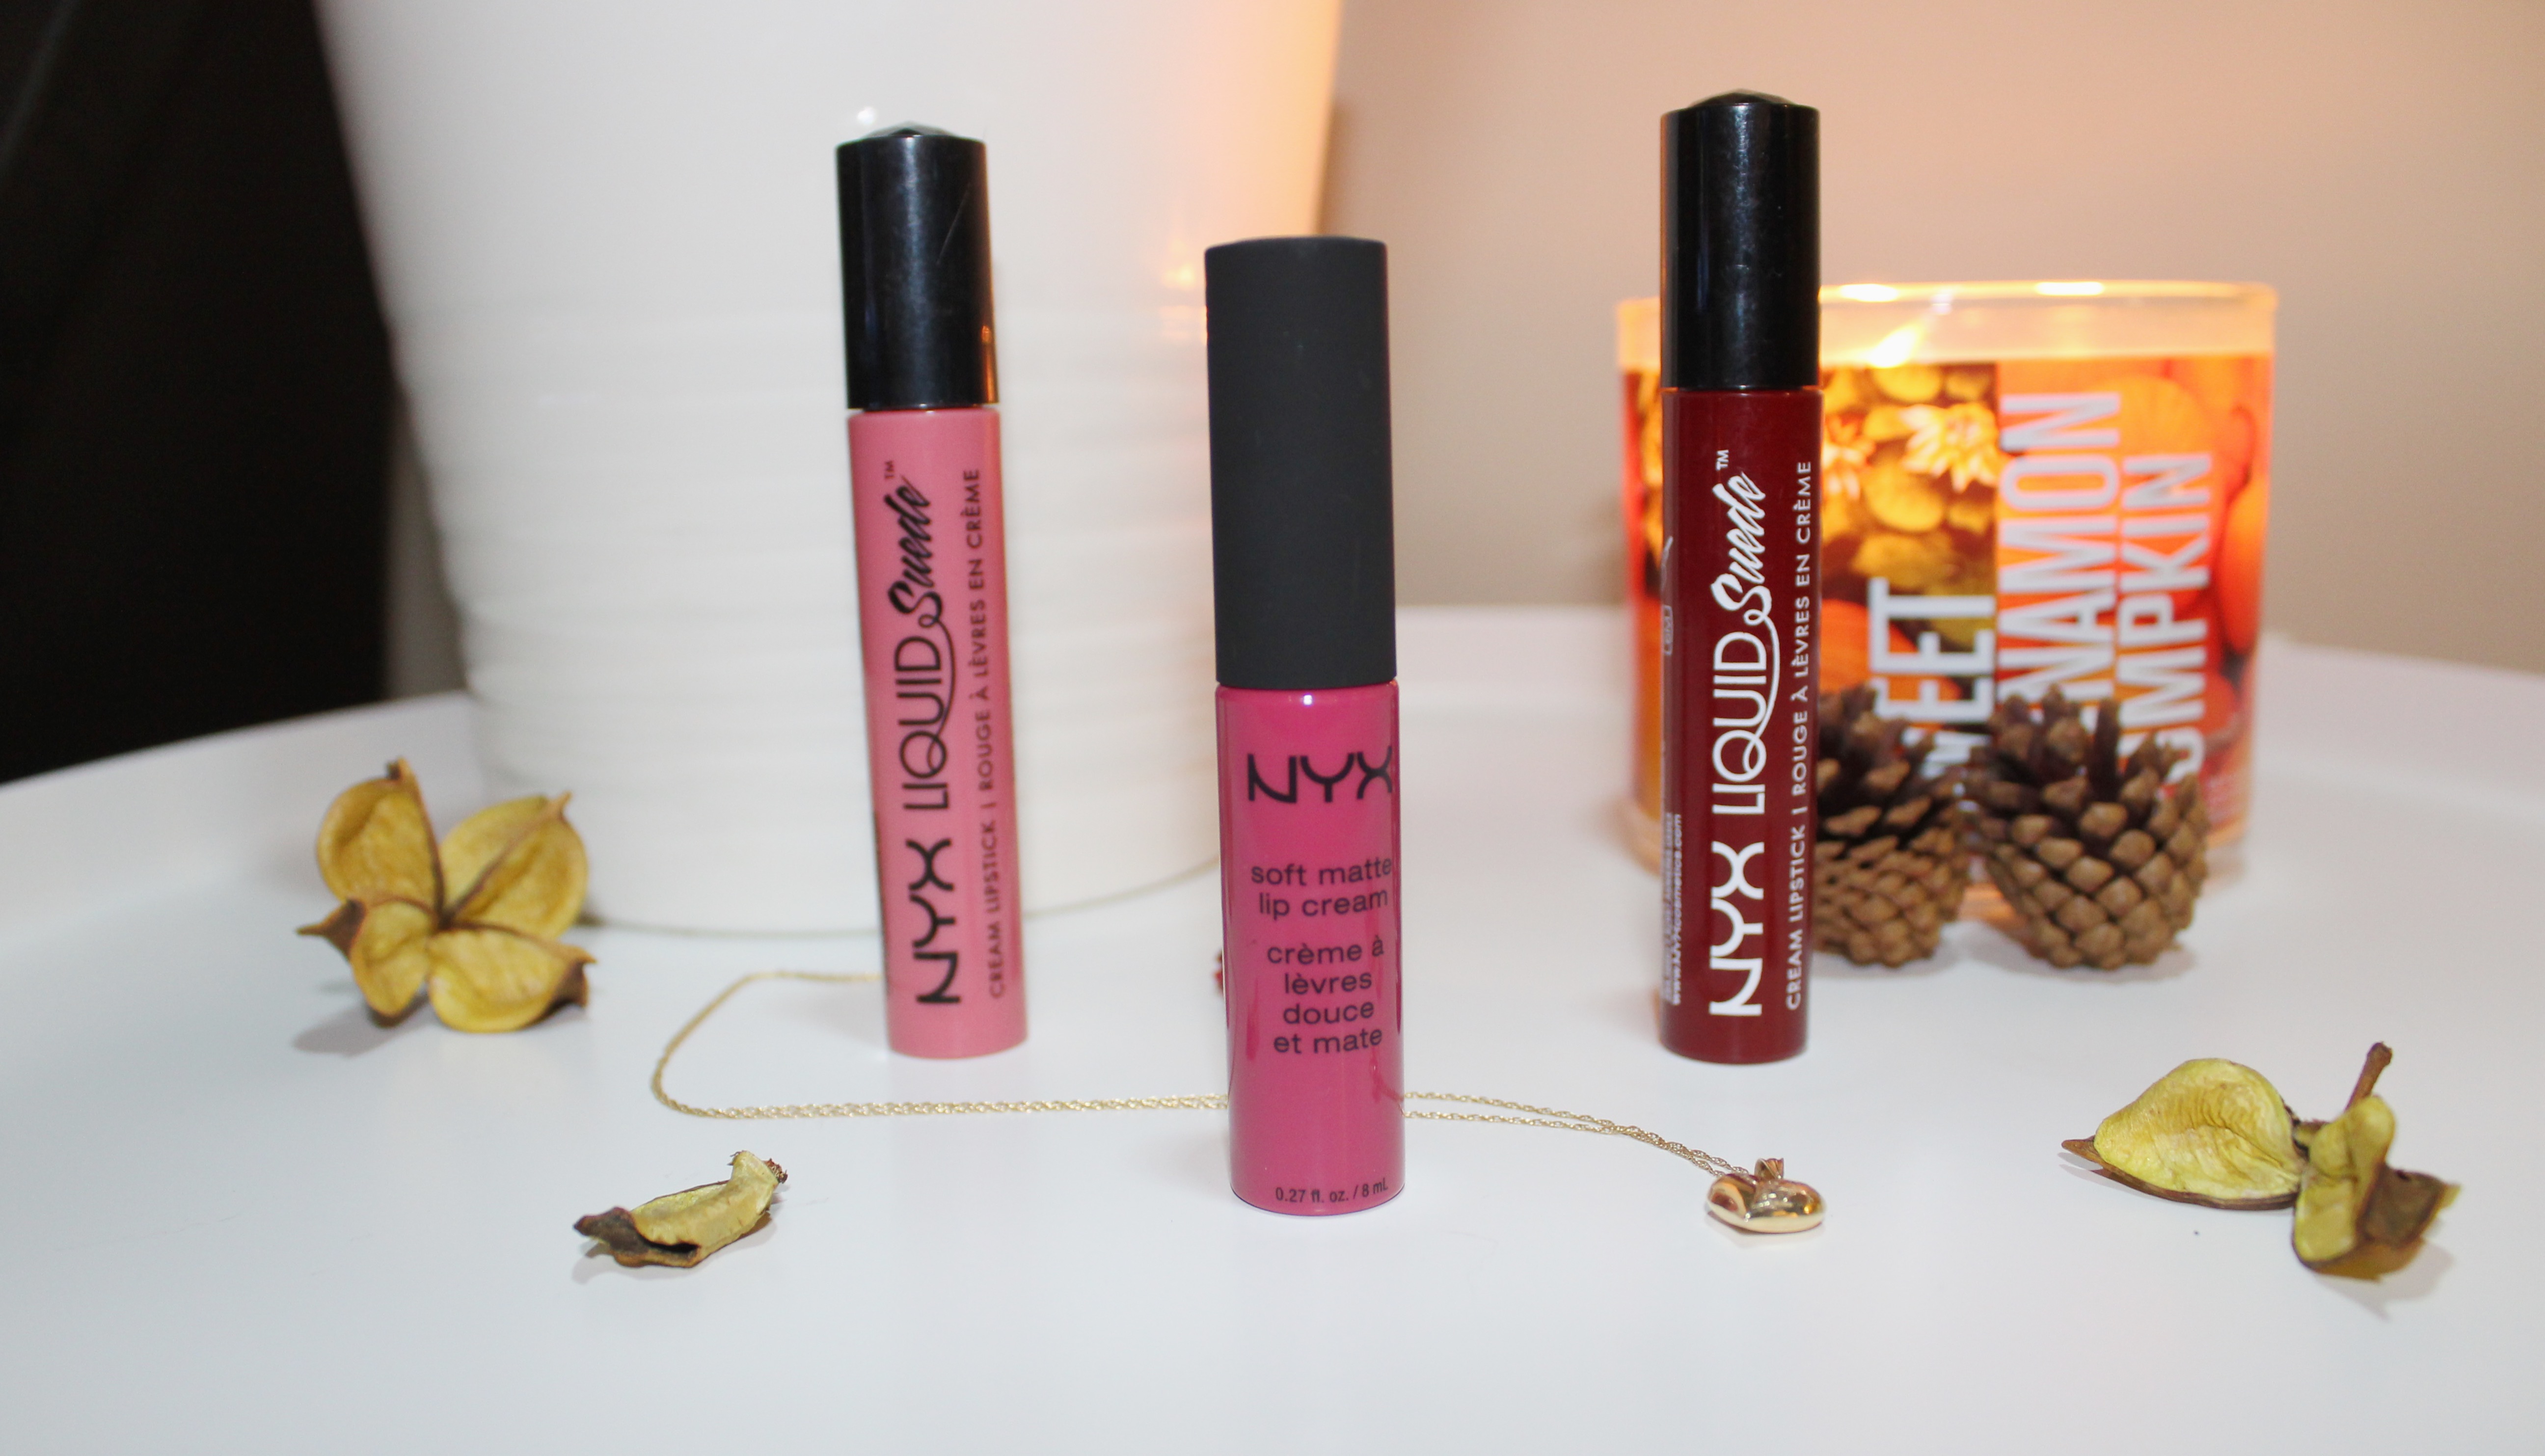 NYX Review: Liquid Suede Cream Lipstick and Soft Matte Lip Cream